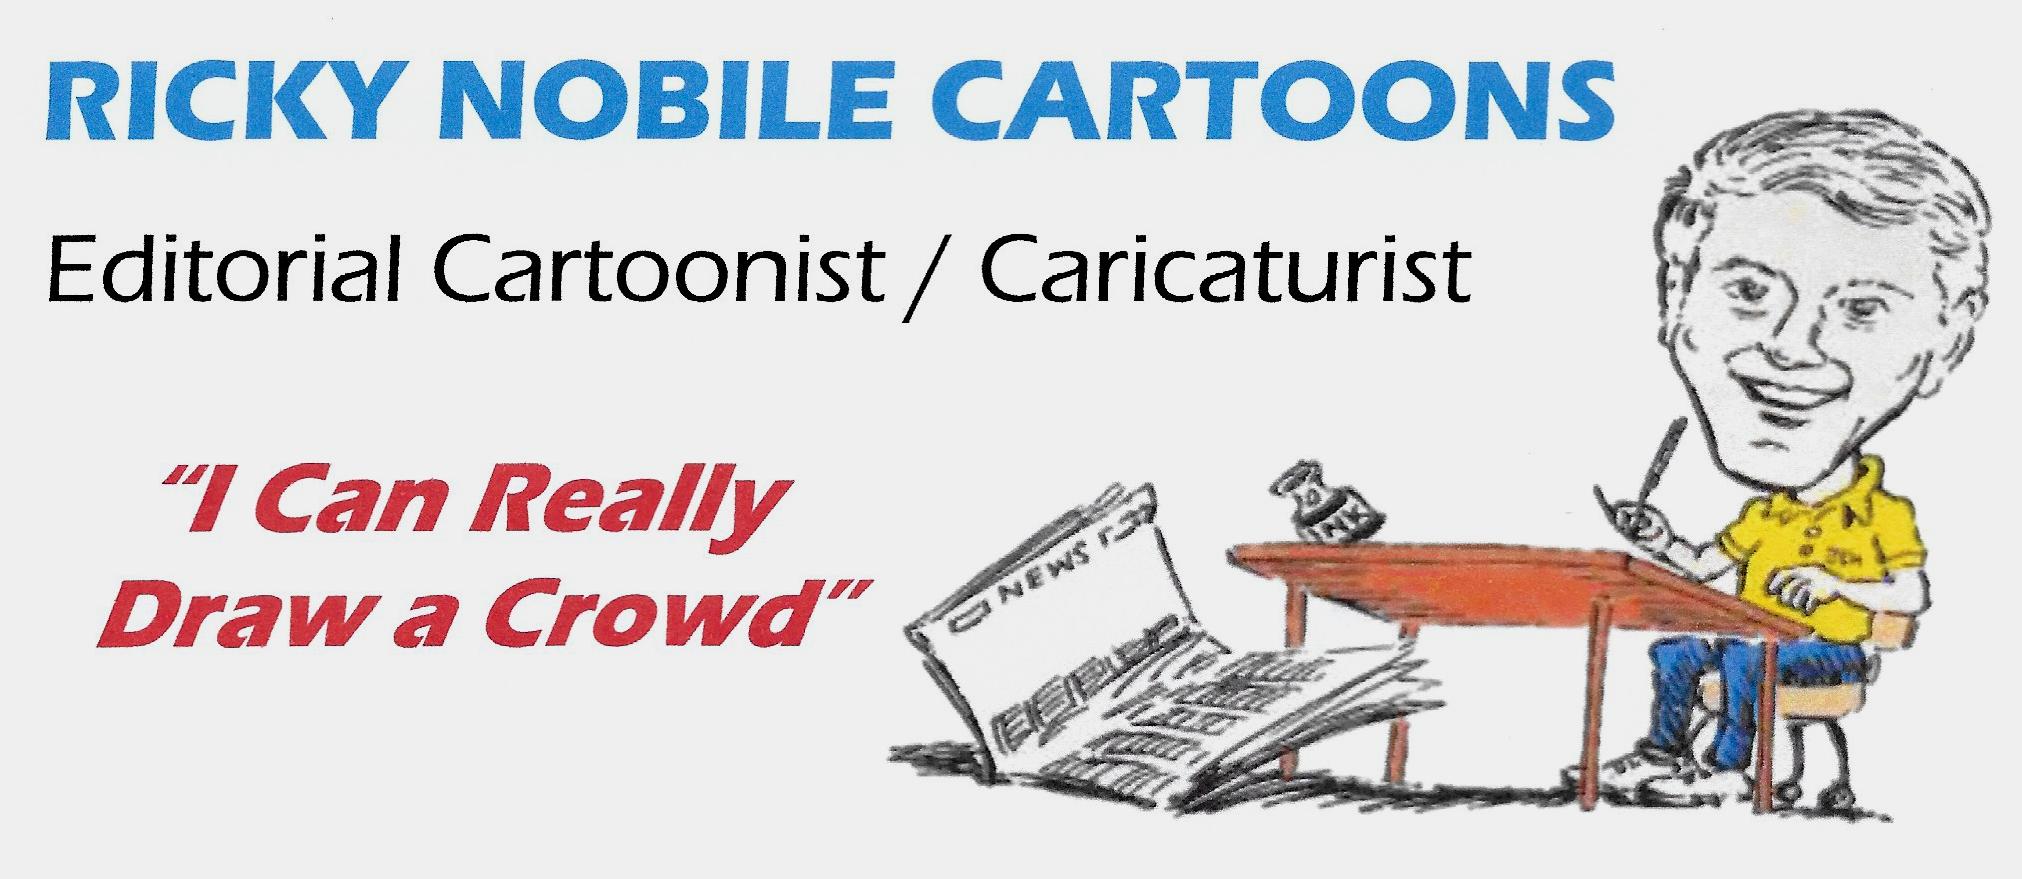 RICKY NOBILE CARTOONS, Caricature Artist / Editorial Cartoonist